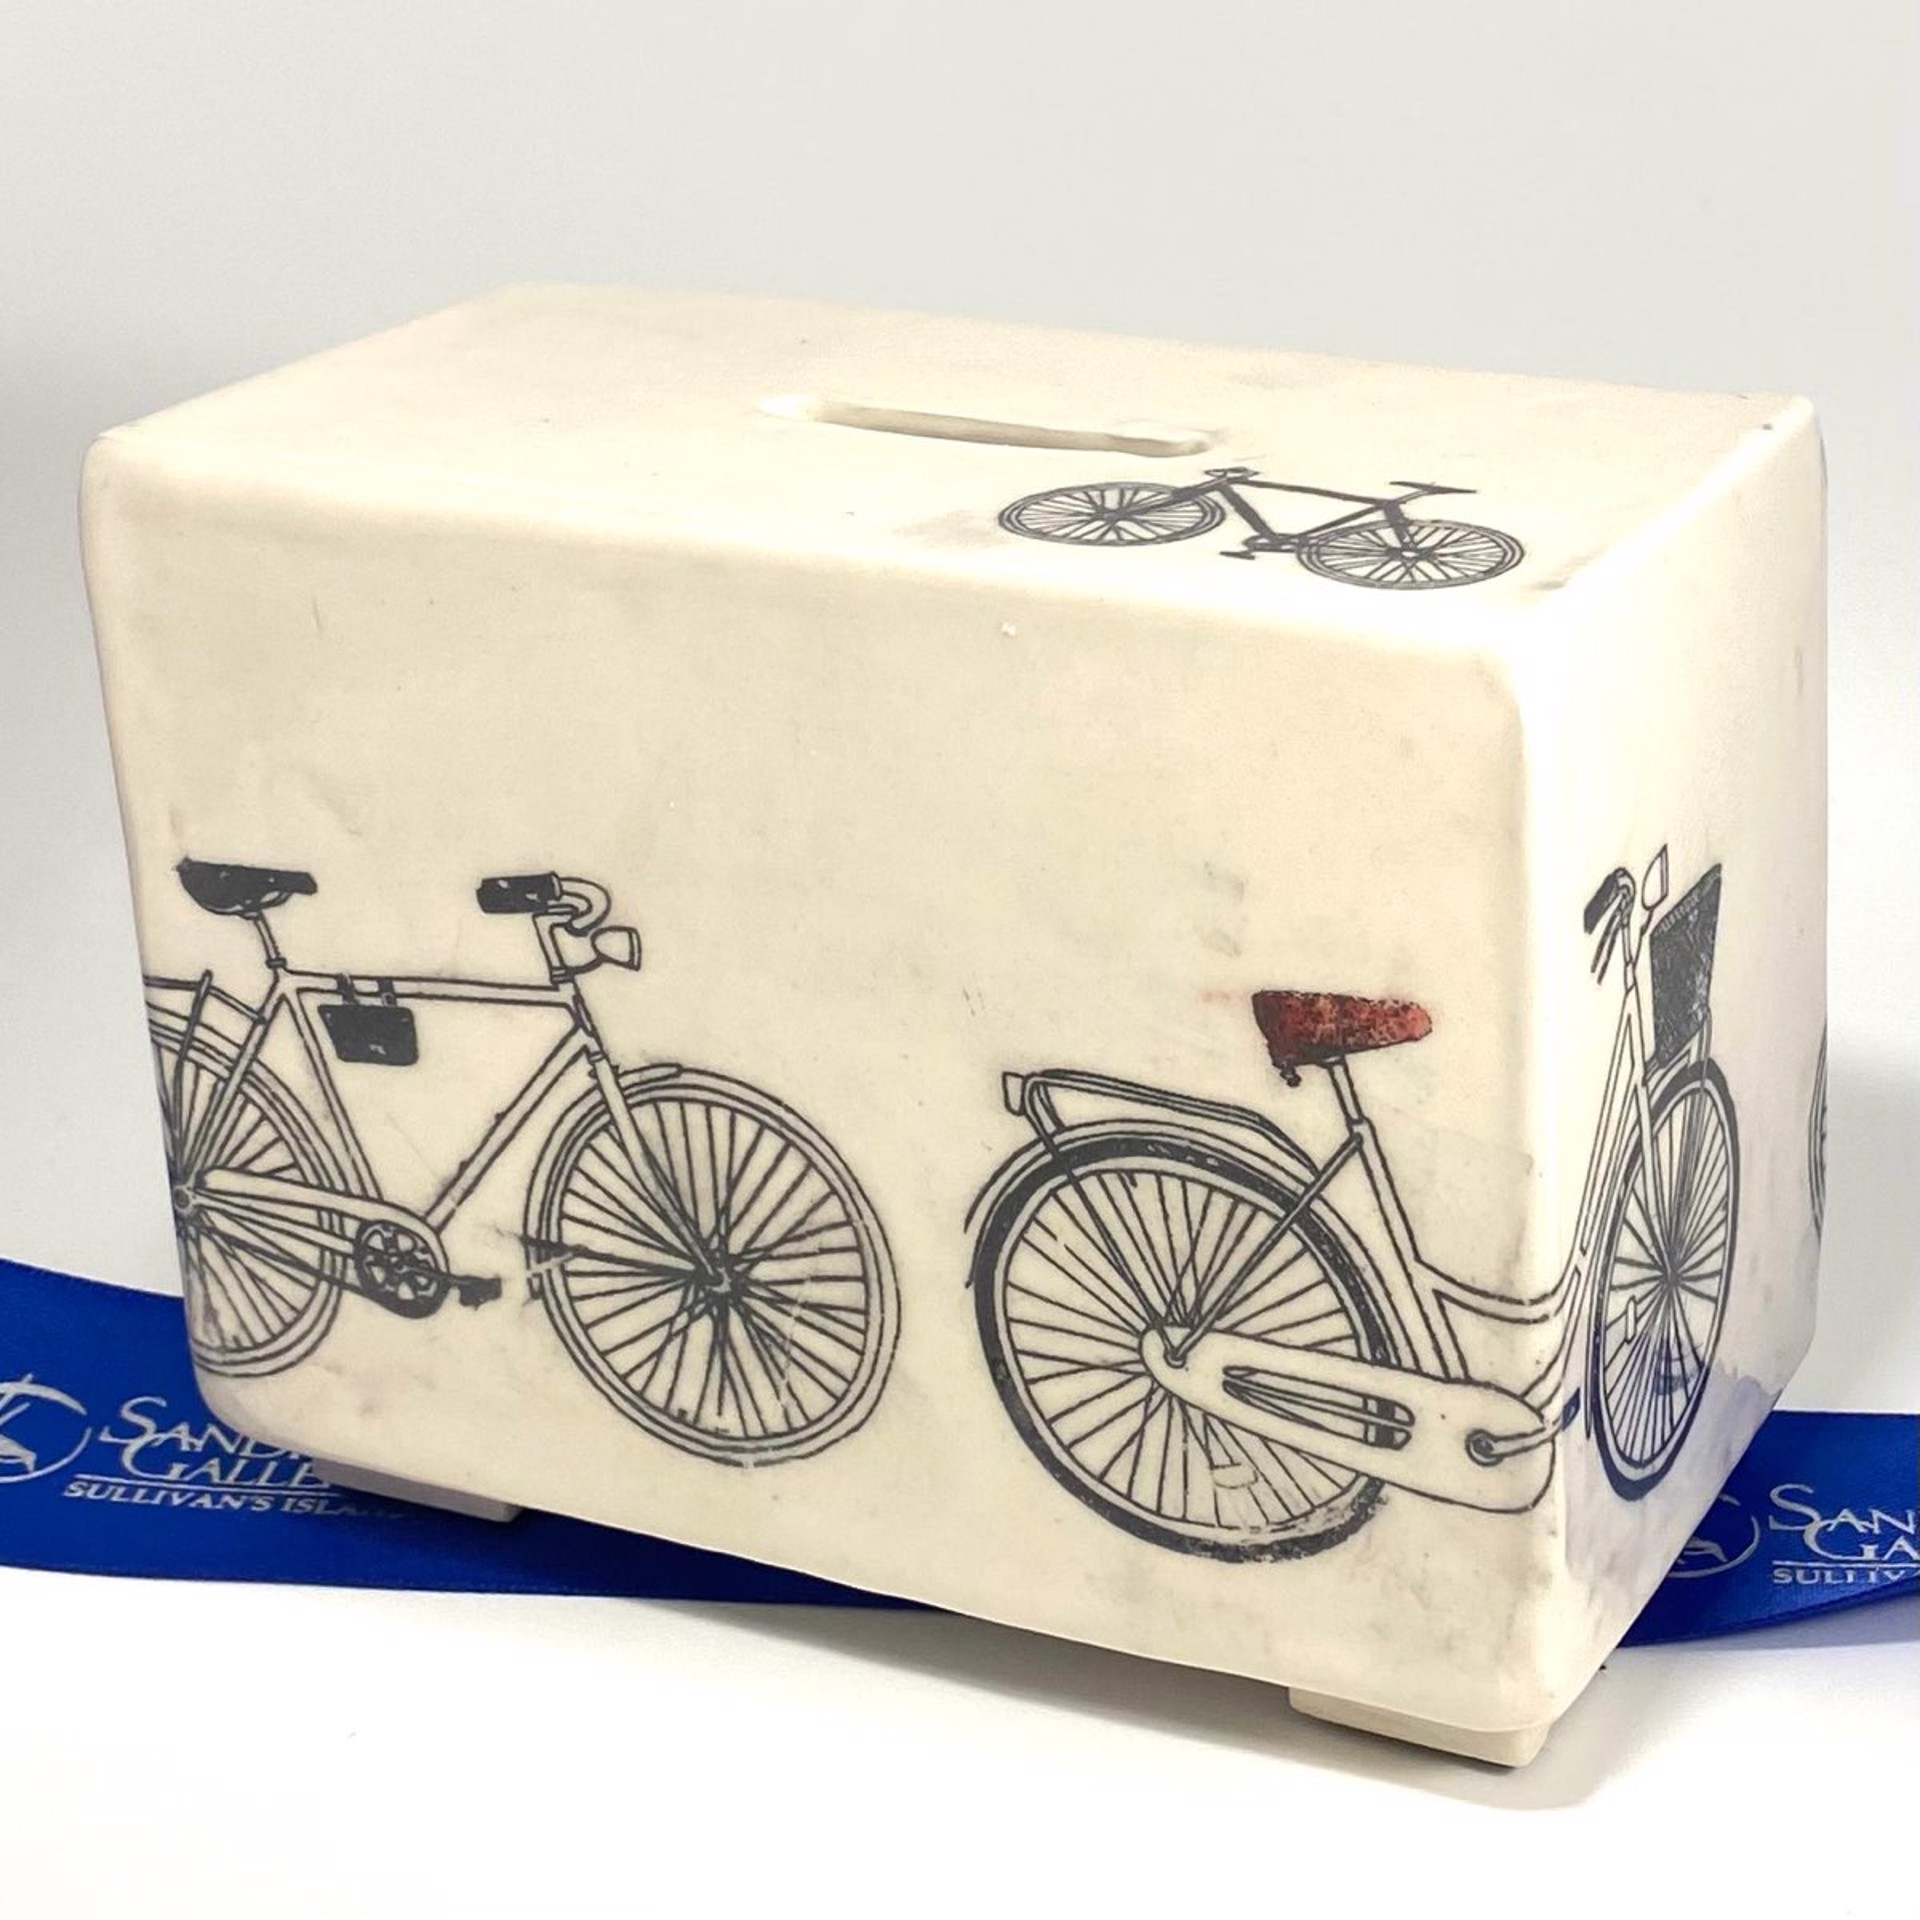 BB22-6 Bicycle Bank by Barbara Bergwerf, ceramics